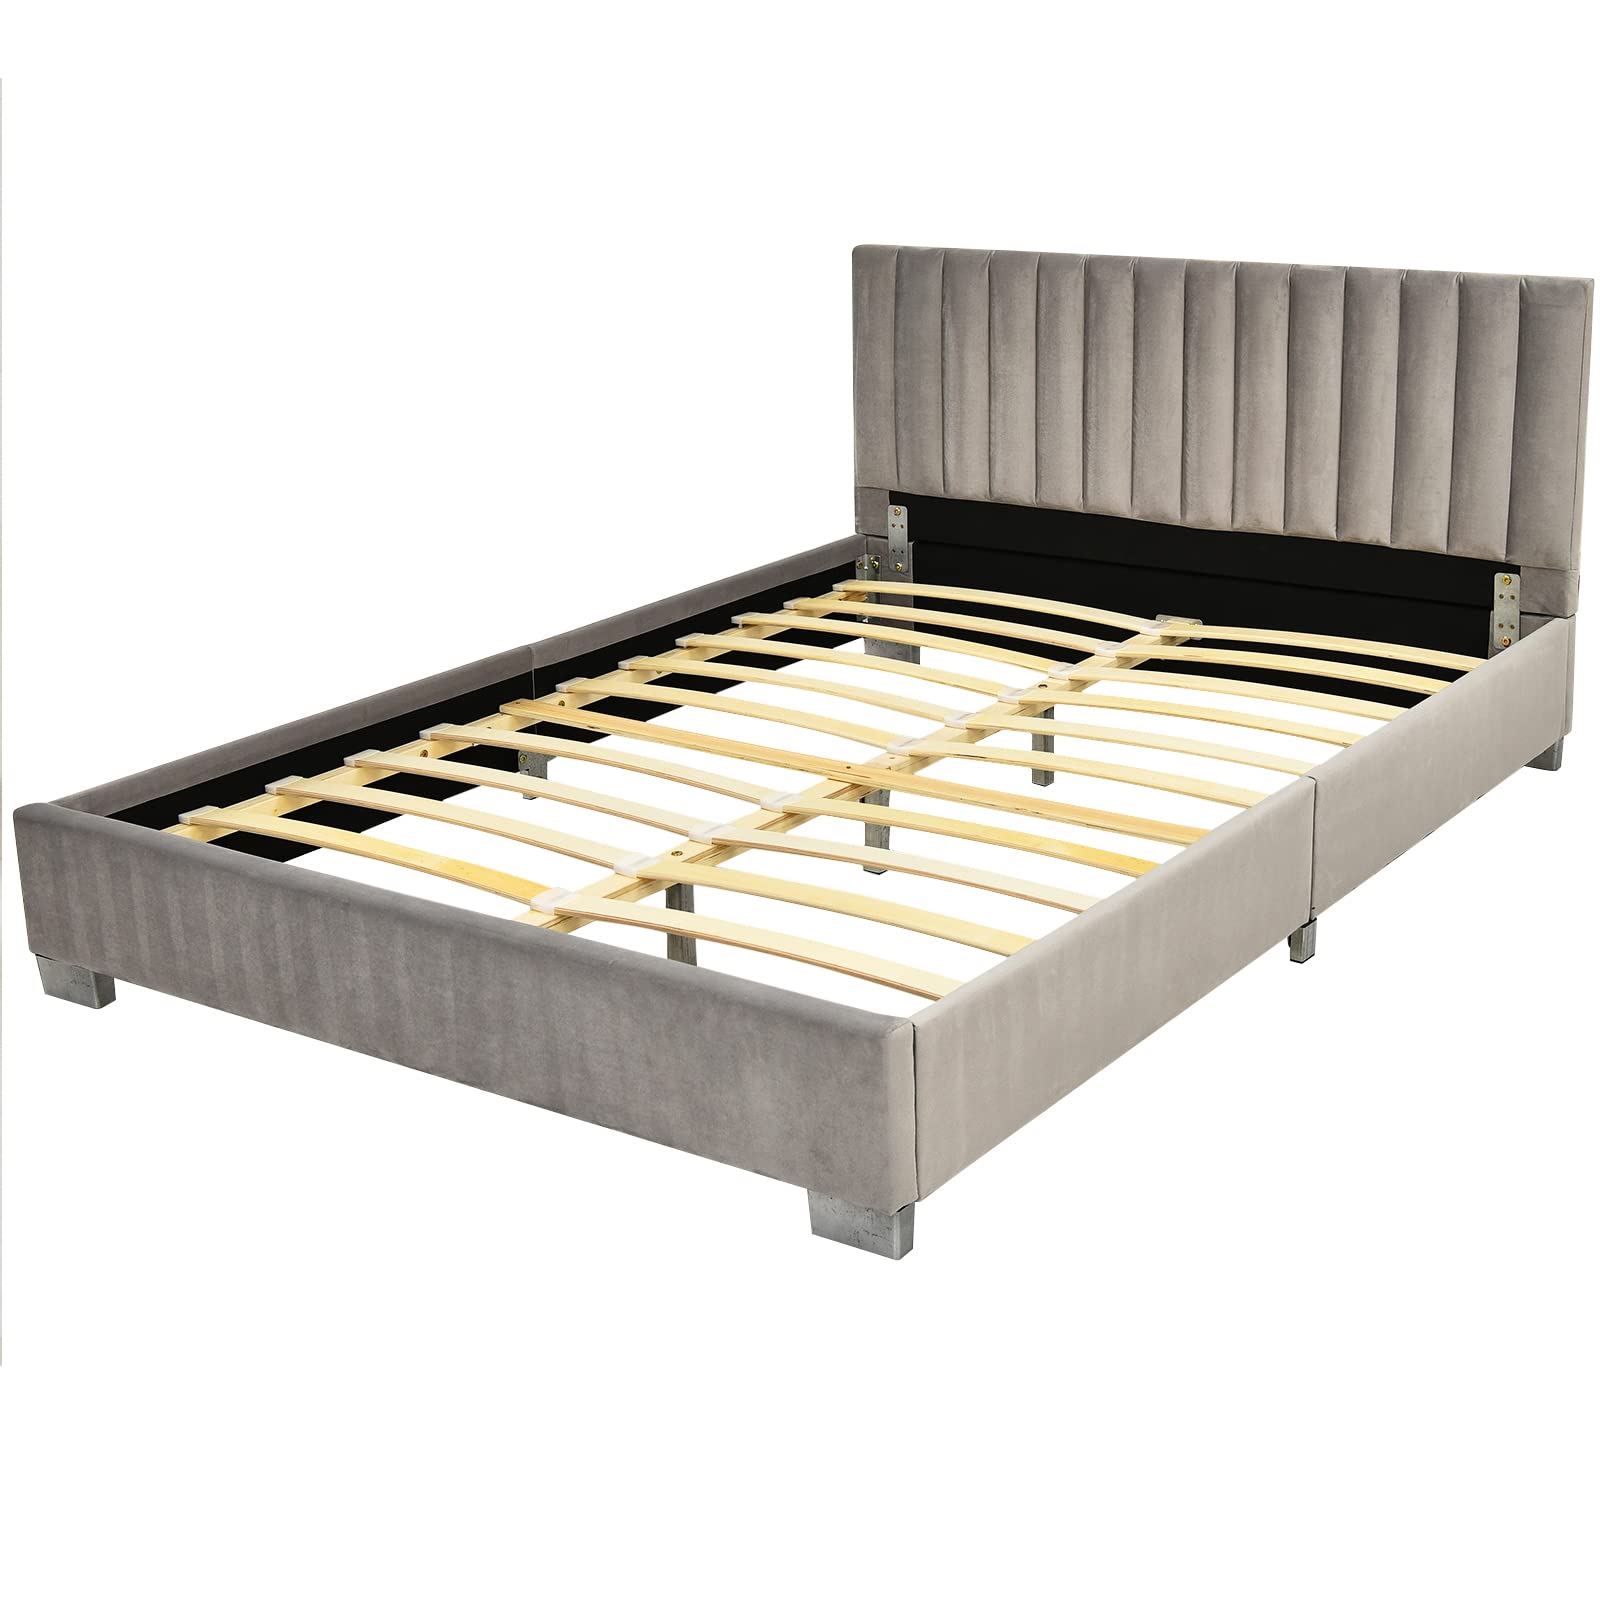 Giantex Upholstered Bed Frame, Full/Queen Size Modern Platform Bed